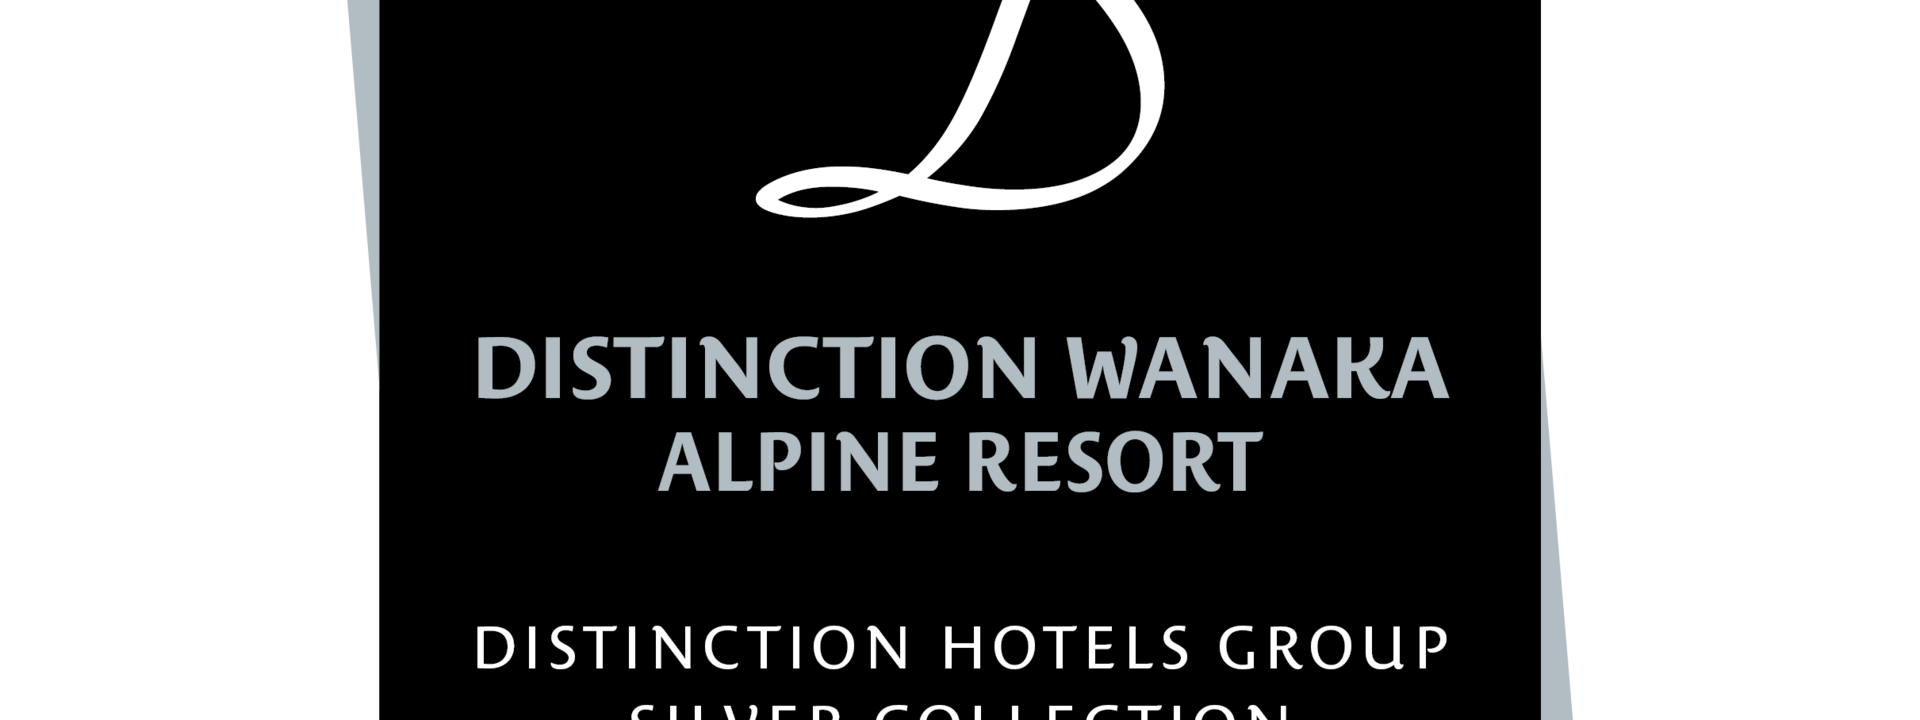 Distinction Wanaka Alpine Resort Logo4 PNG.png